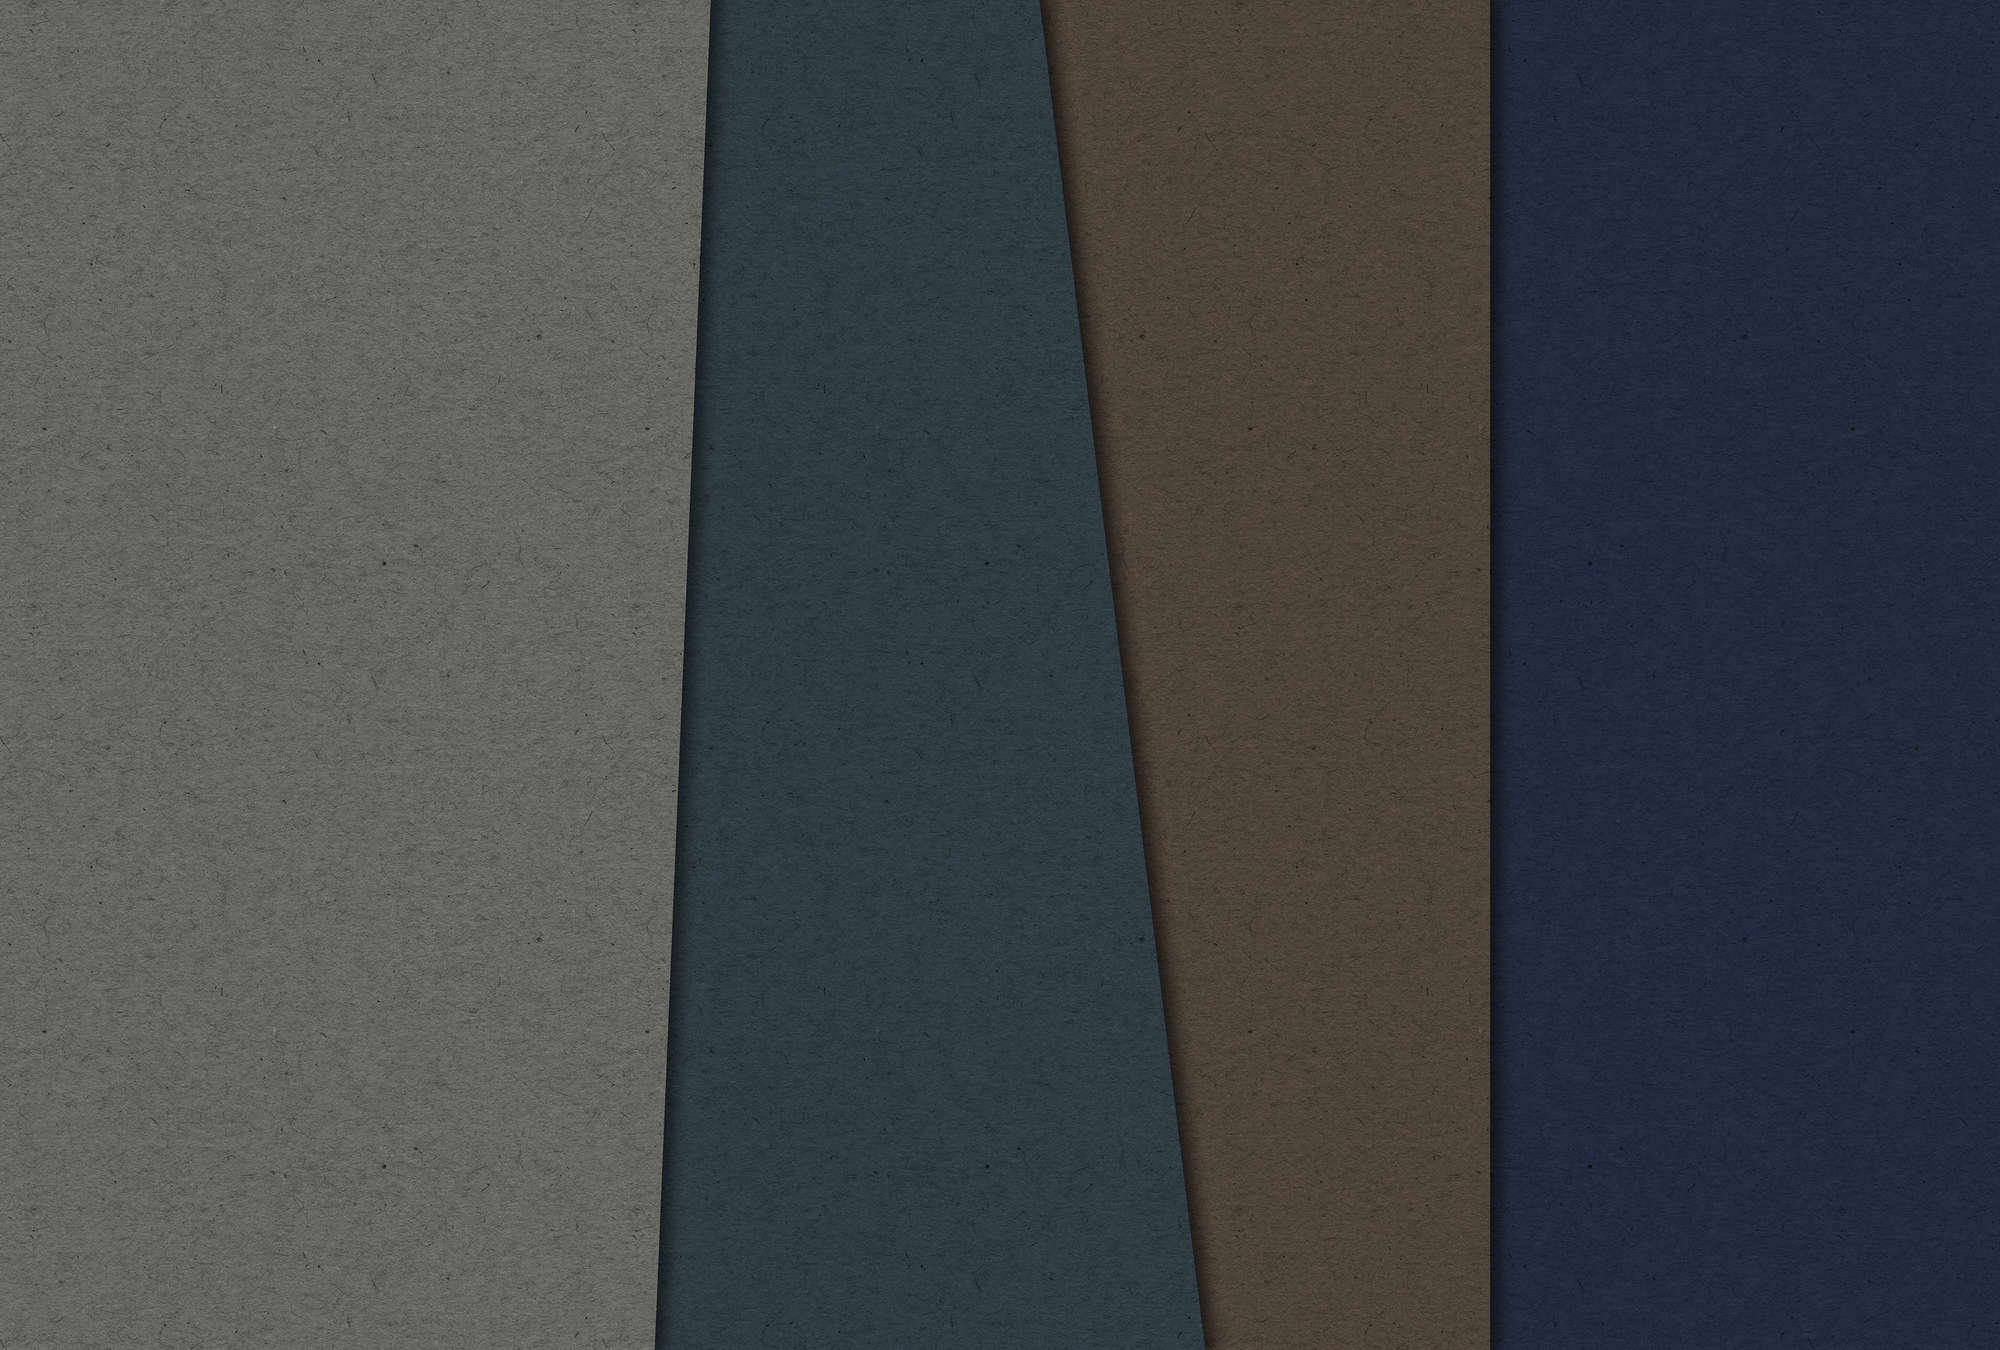             Layered Cardboard 2 - Photo wallpaper in cardboard structure with dark colour fields - Blue, Brown | Matt smooth fleece
        